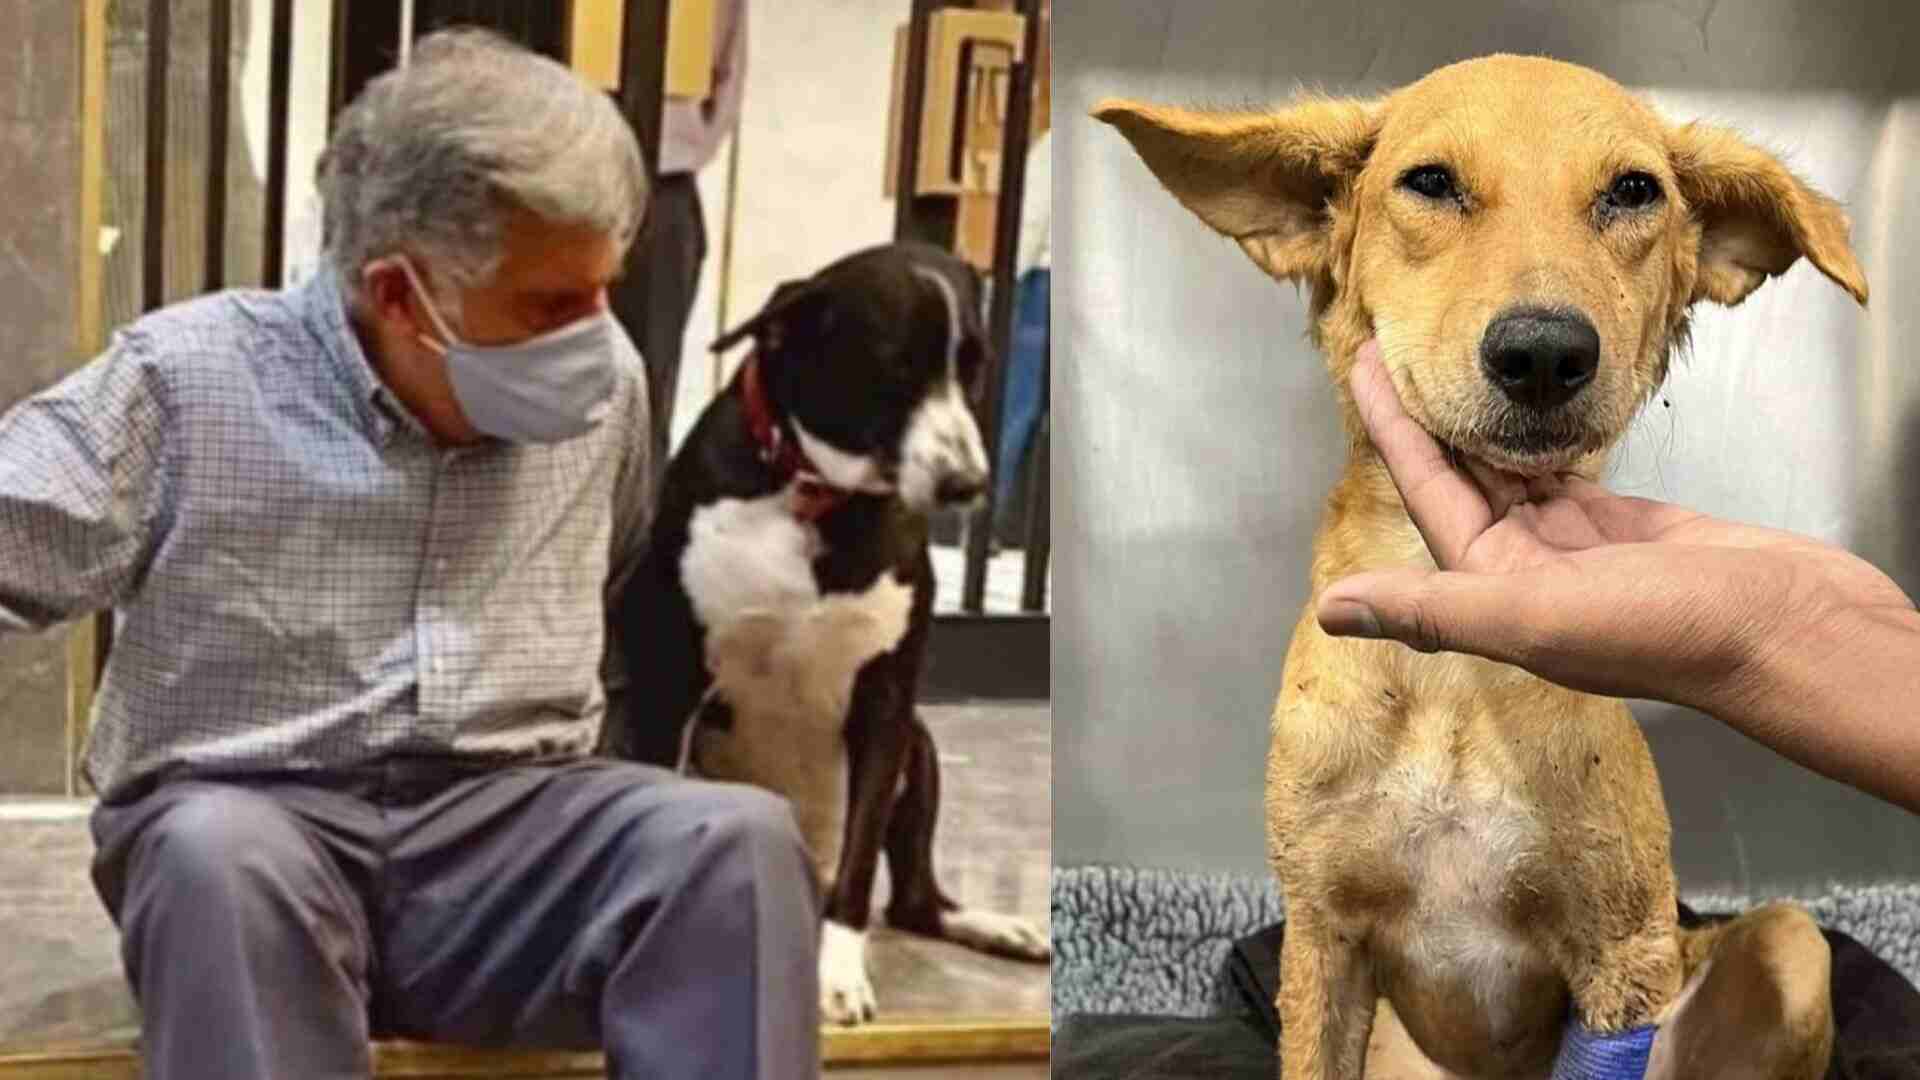 ‘Mumbai, I Need Your Help’, Ratan Tata Seeks Blood Donor For Stray Dog